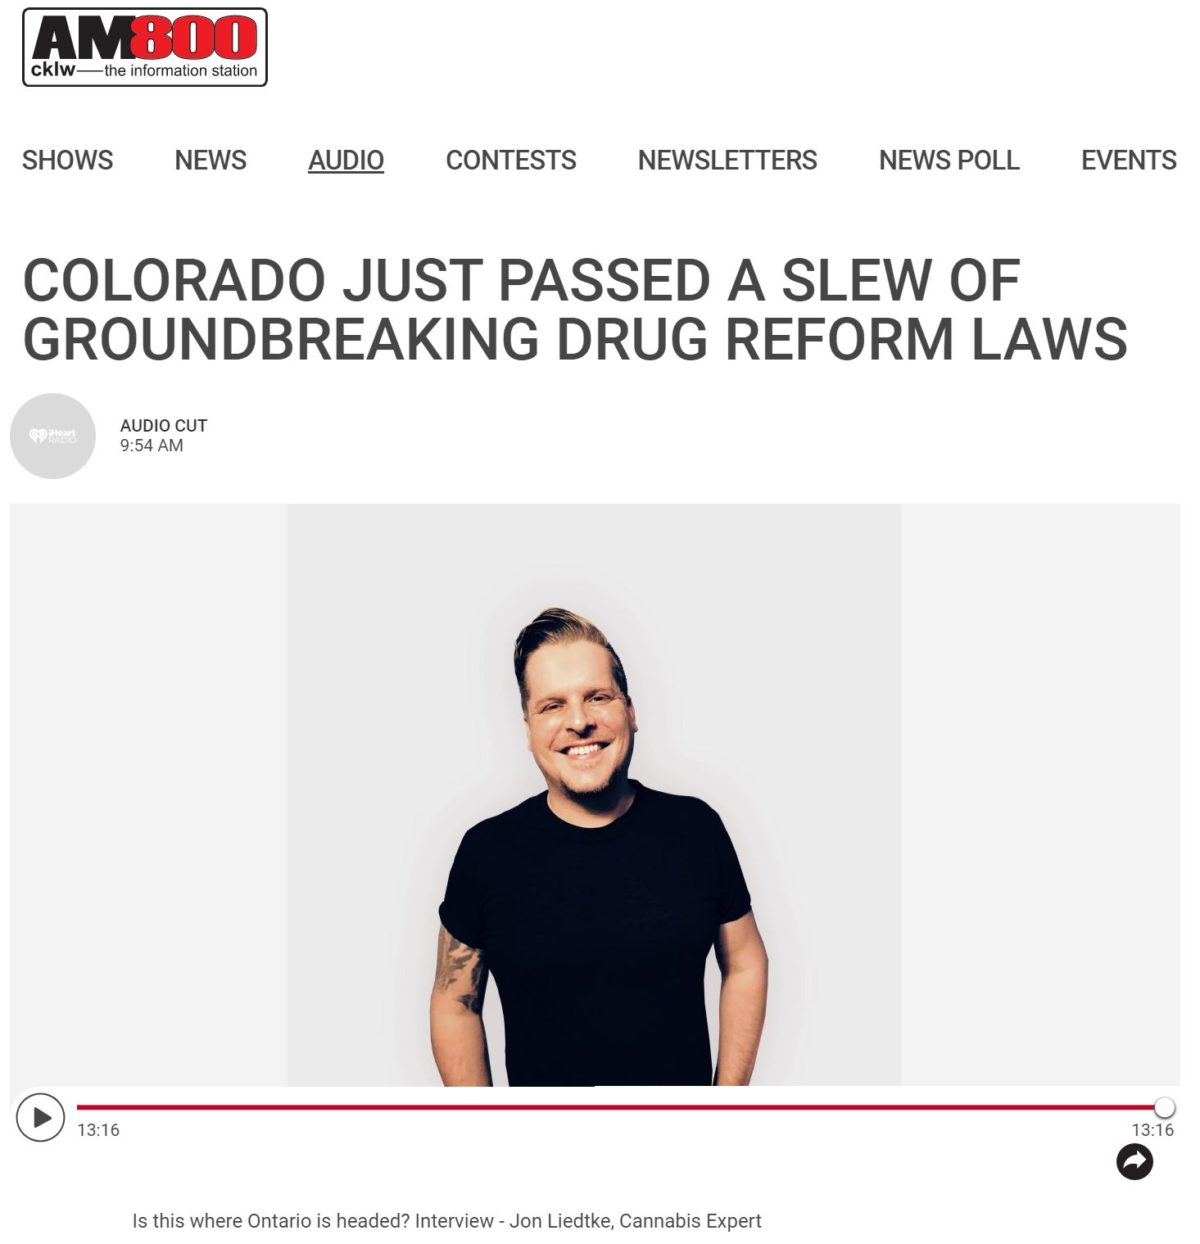 AM800: Dan MacDonald Show: COLORADO JUST PASSED A SLEW OF GROUNDBREAKING DRUG REFORM LAWS